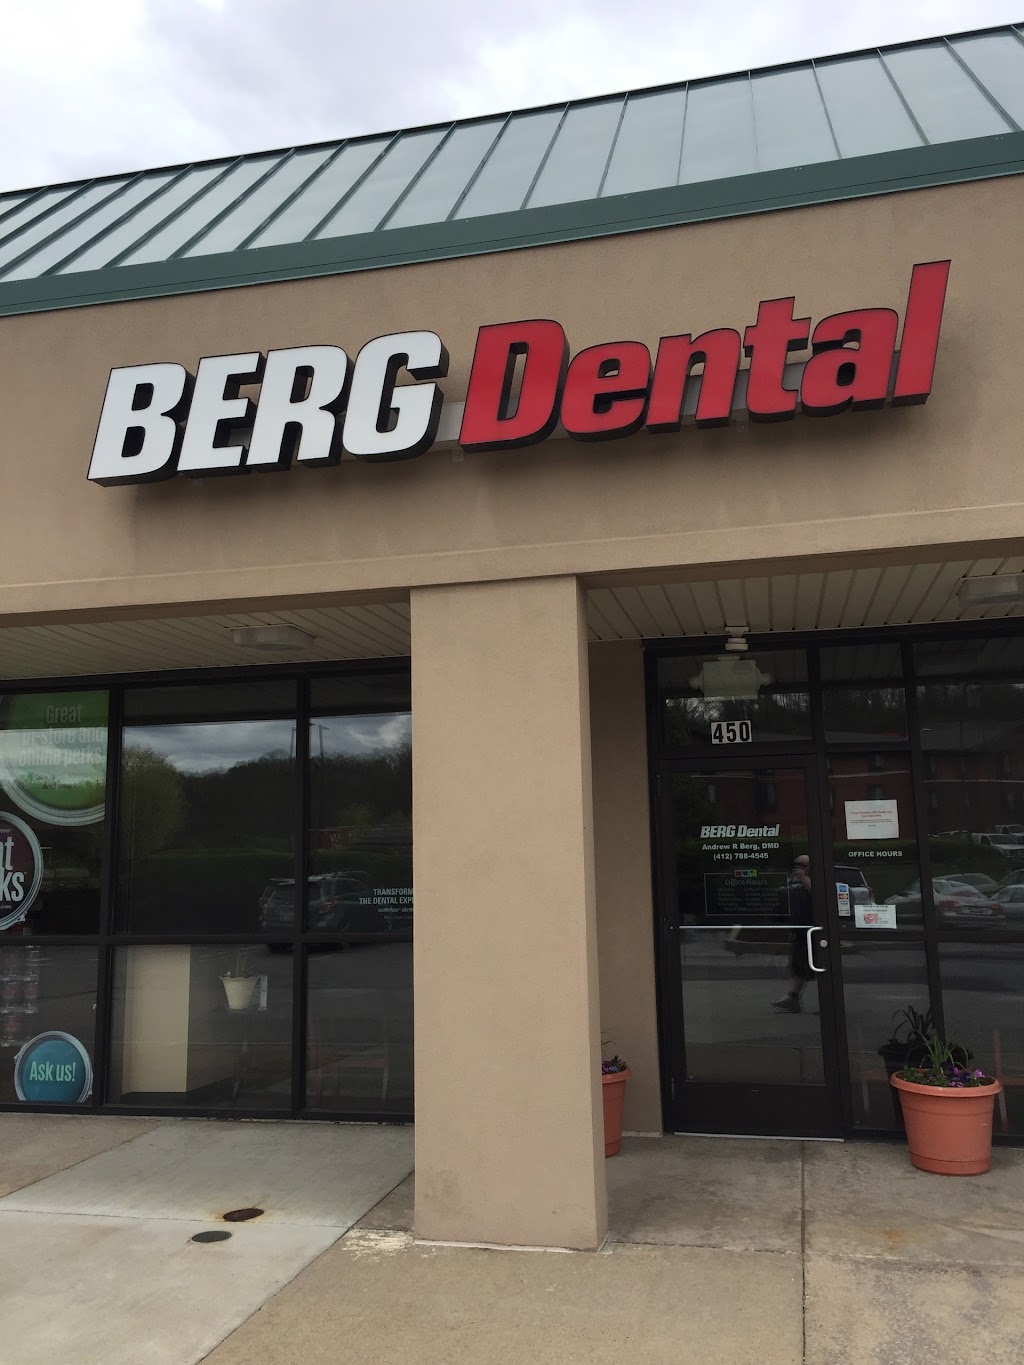 Berg Dental | 450 Home Dr, Pittsburgh, PA 15275, USA | Phone: (412) 788-4545